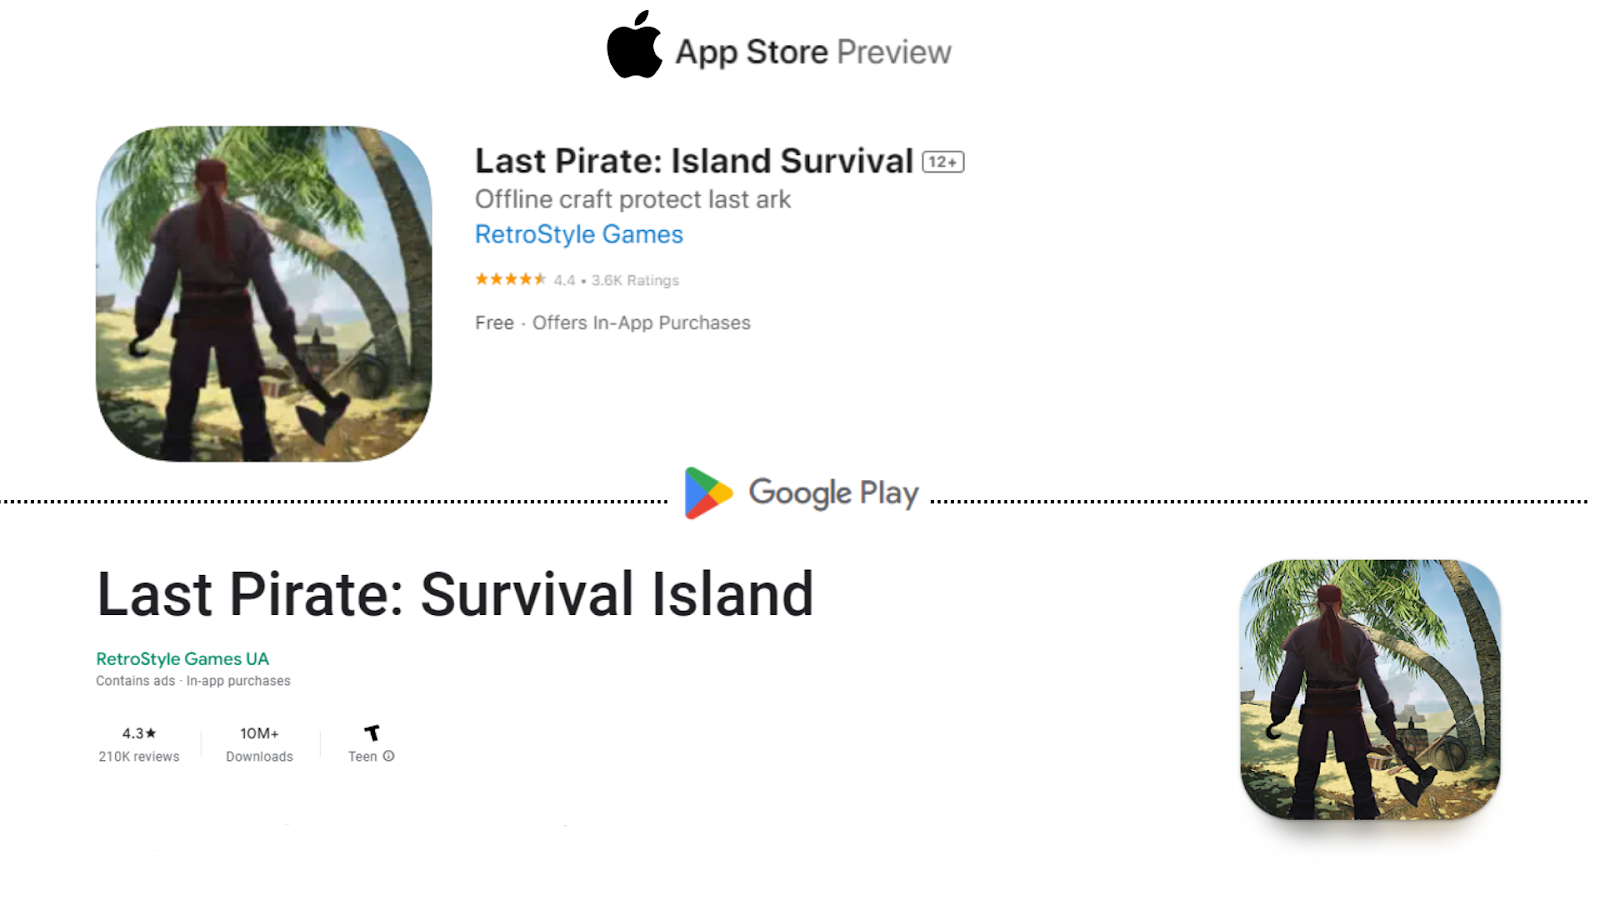 Last Pirate: Island Survival - Community